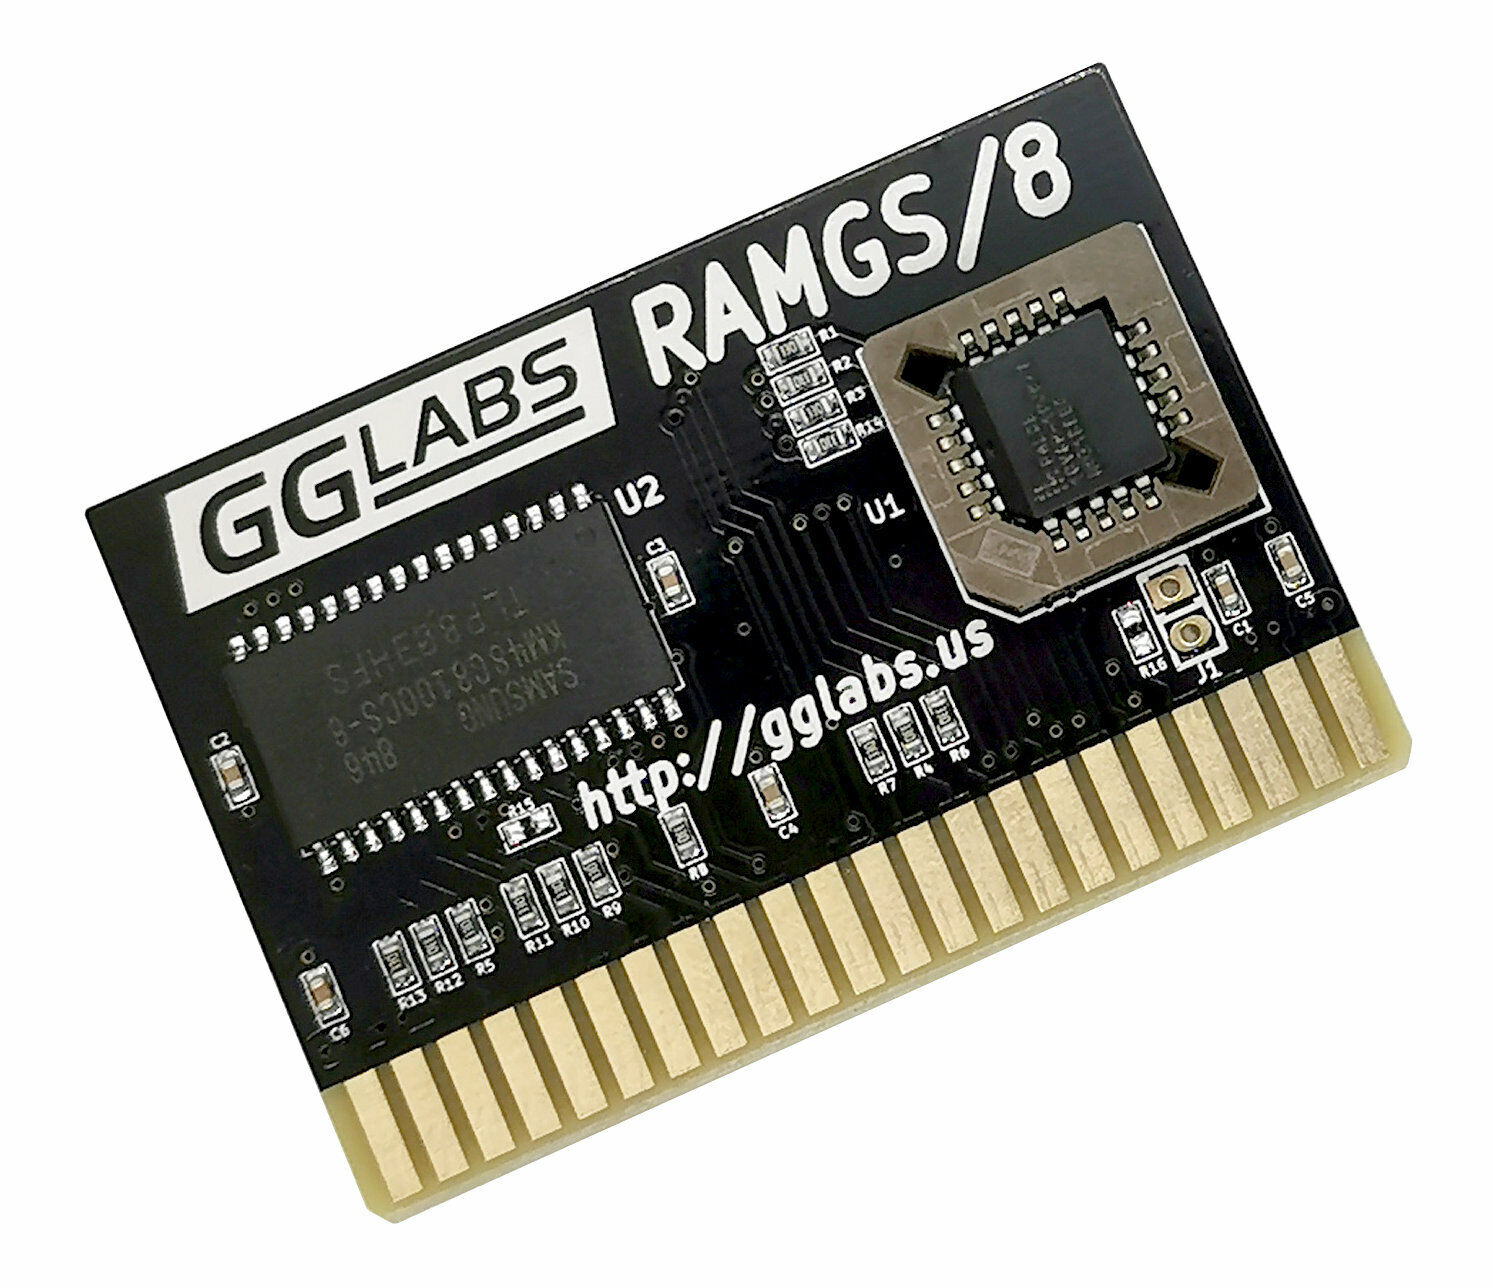 New GGLABS RAMGS/8 Apple IIgs 8MB memory expansion - 8M RAM